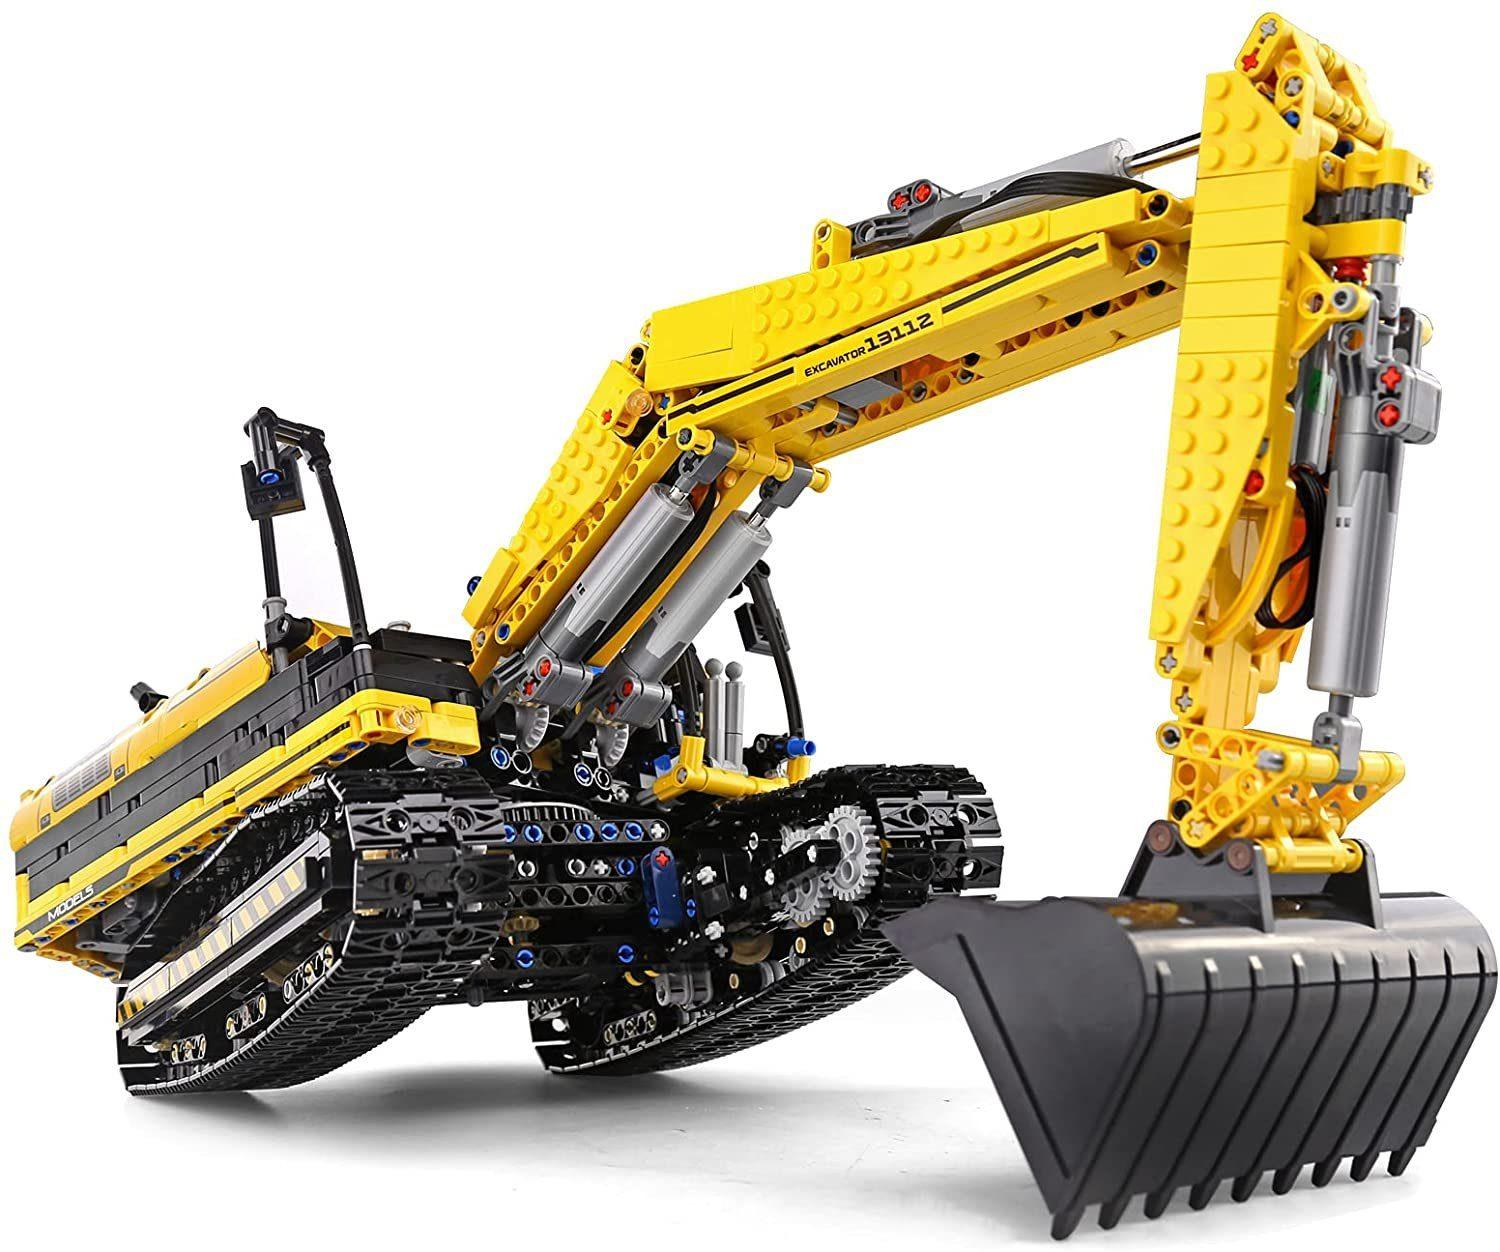 Excavator set, compatible with Lego